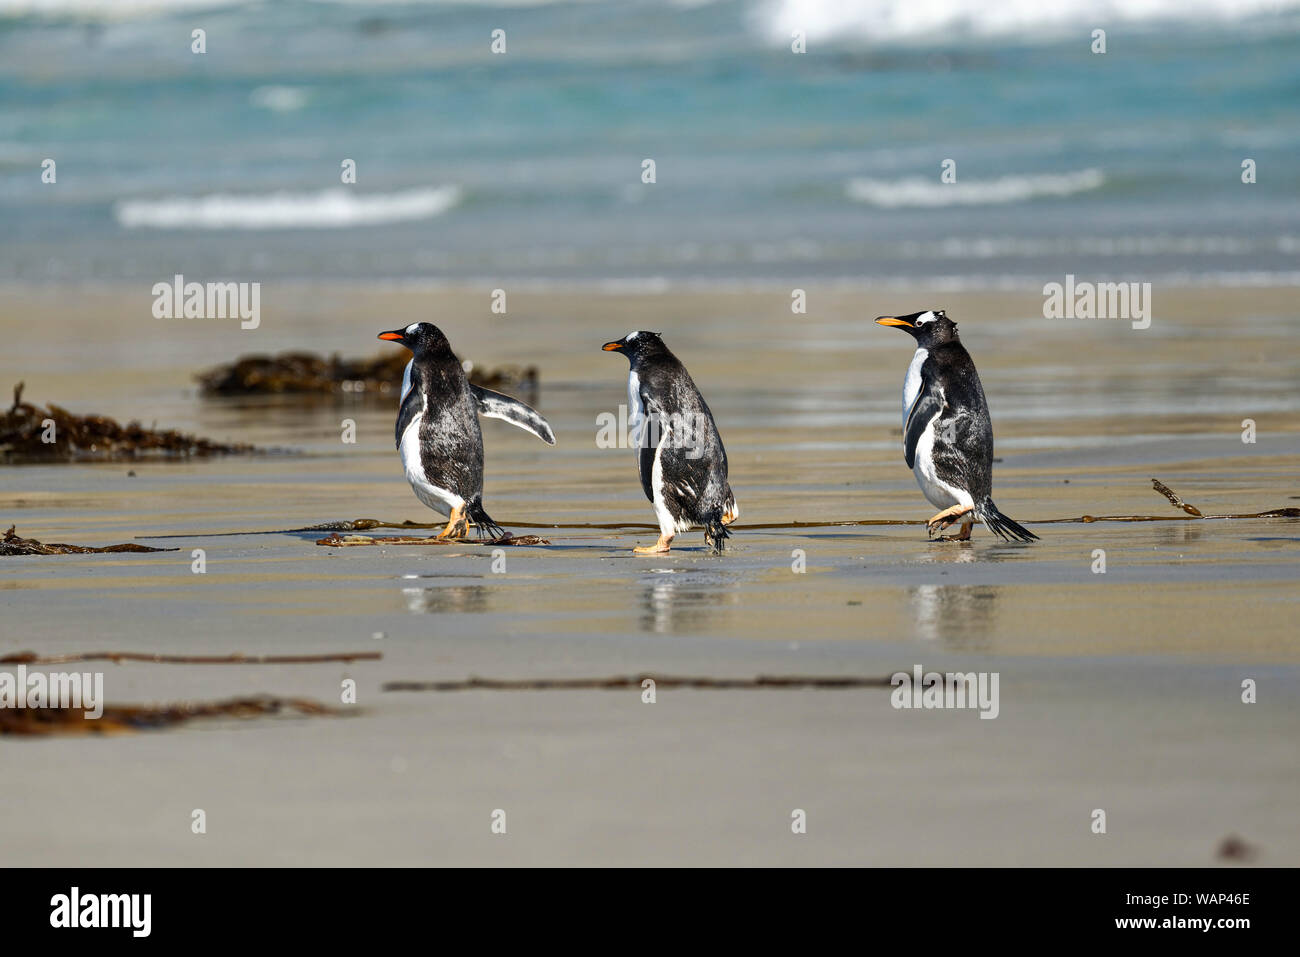 Drei Eselspinguine (Pygoscelis papua) laufen am Strand, Falkland Inseln. Three gentoo penguins walking on the beach, Falkland Islands Stock Photo